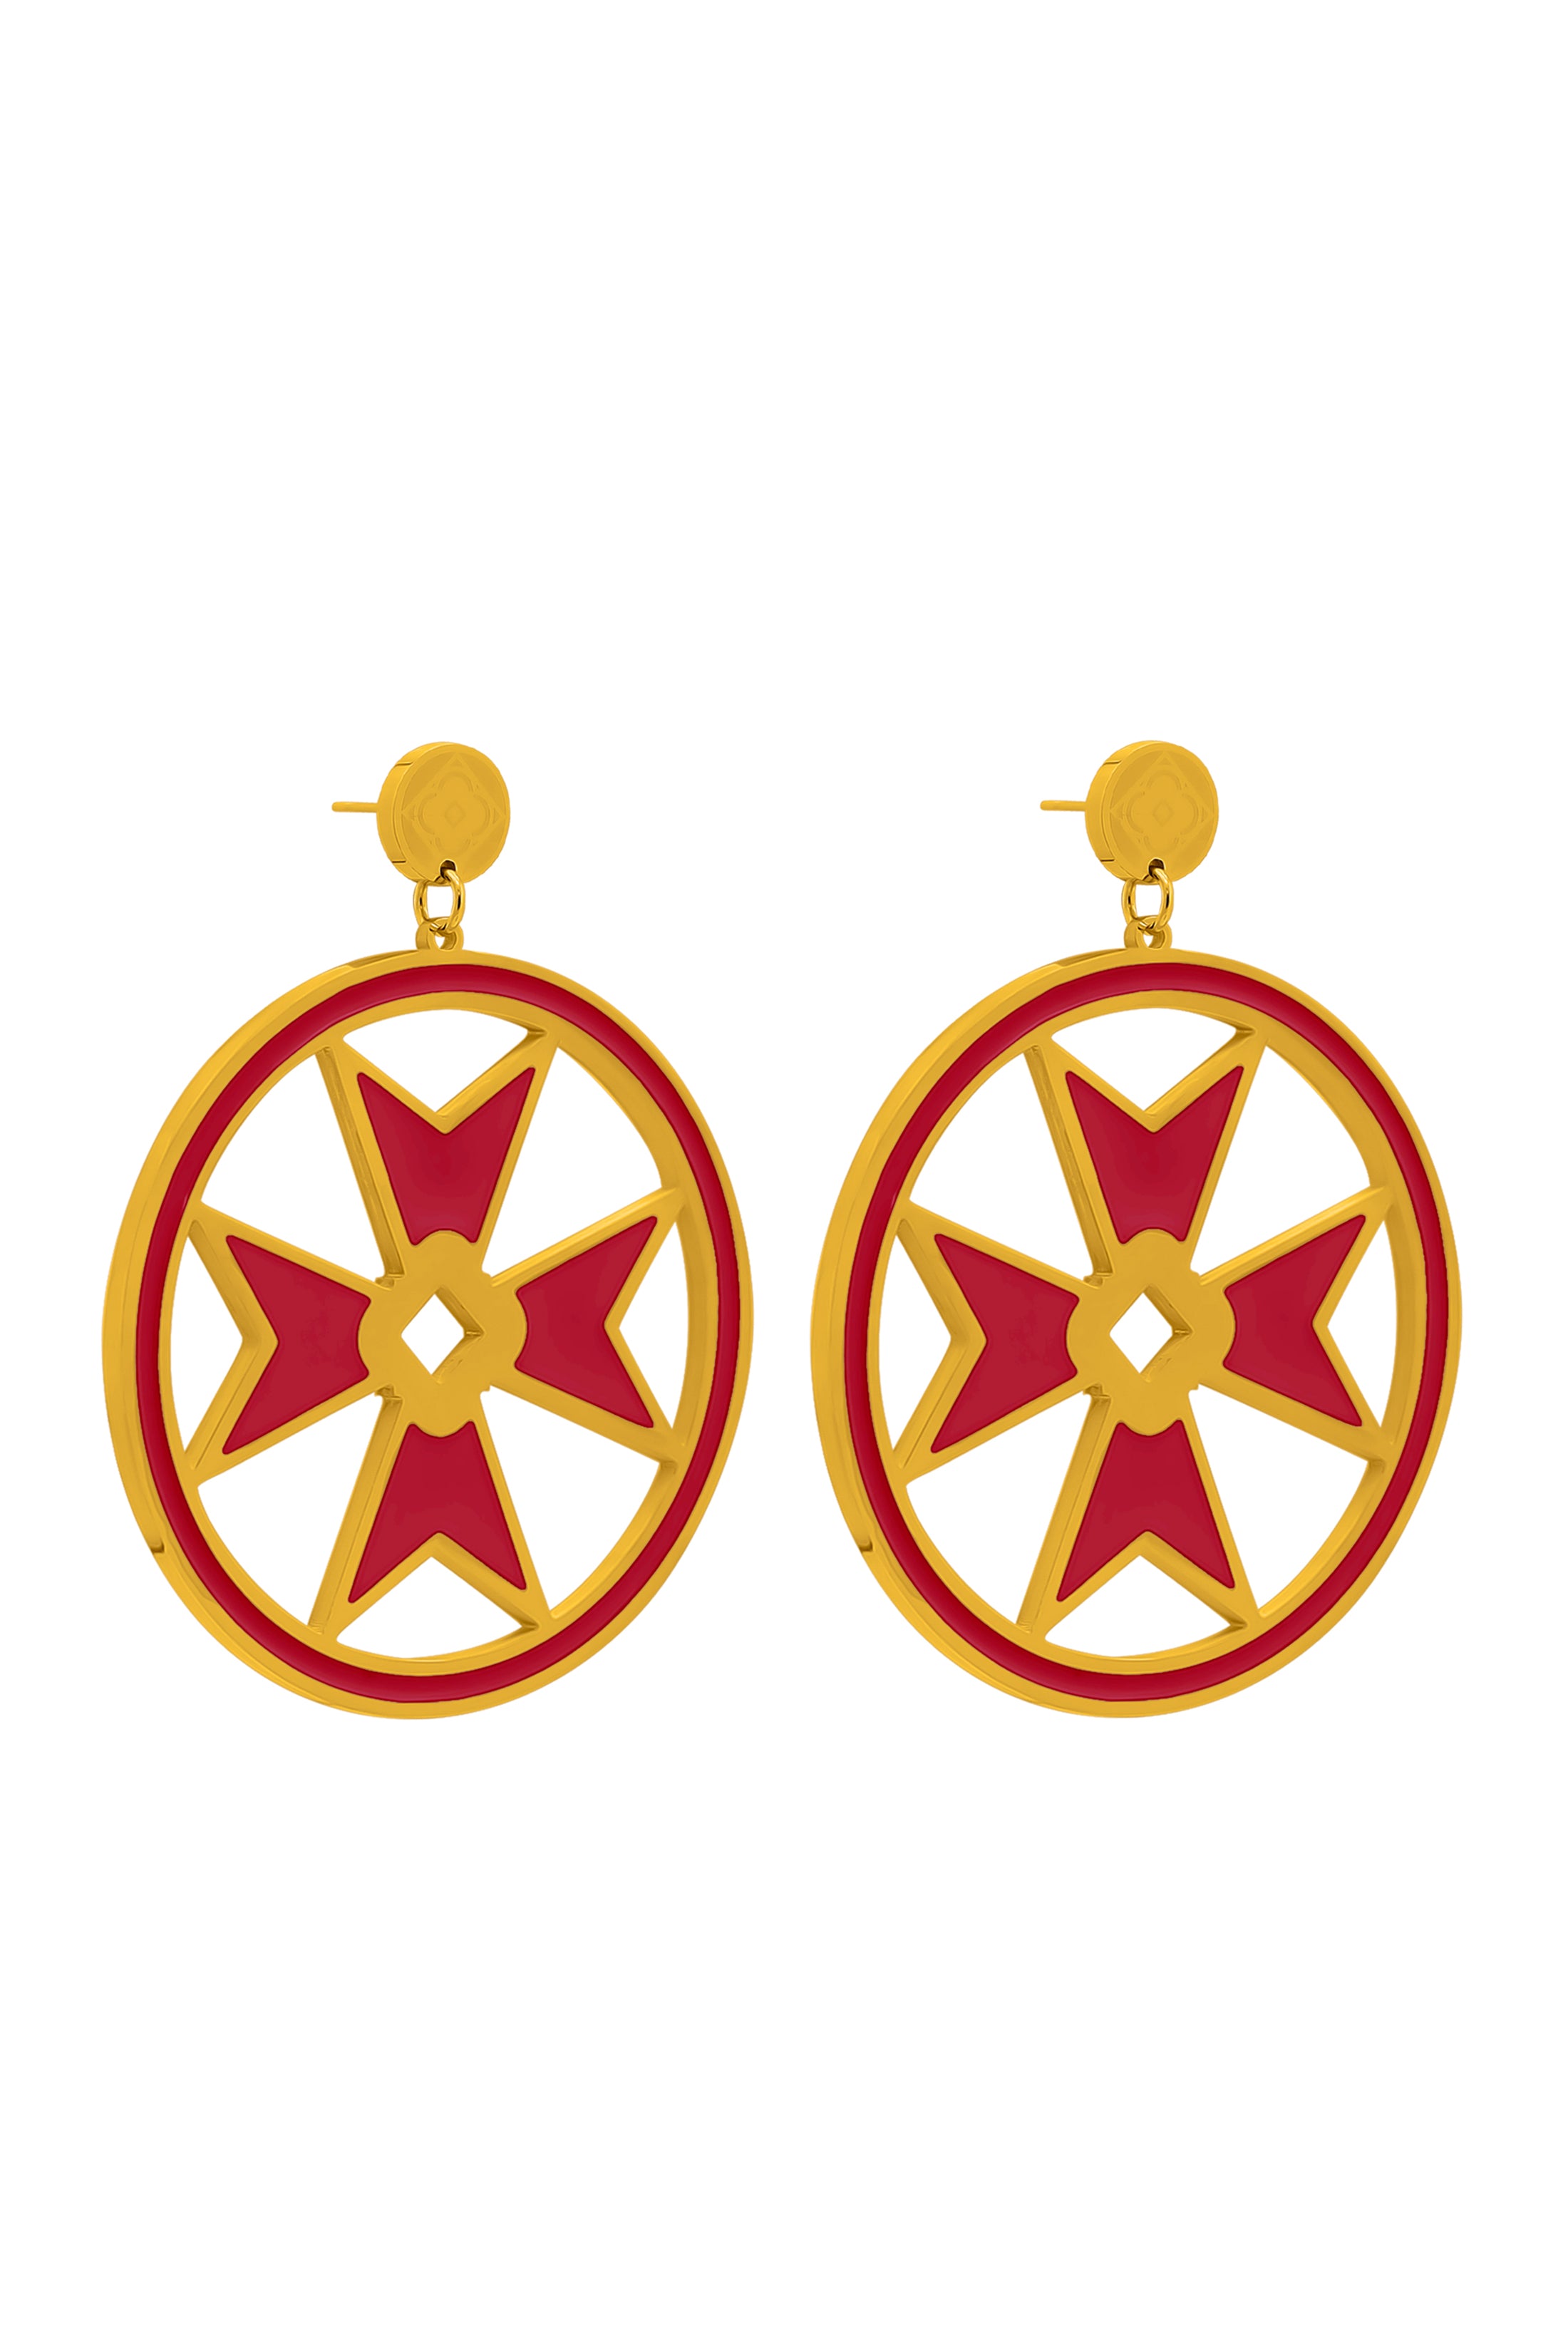 Catriona’s Large Maltese Cross Hoop Earring Set in Red Enamel